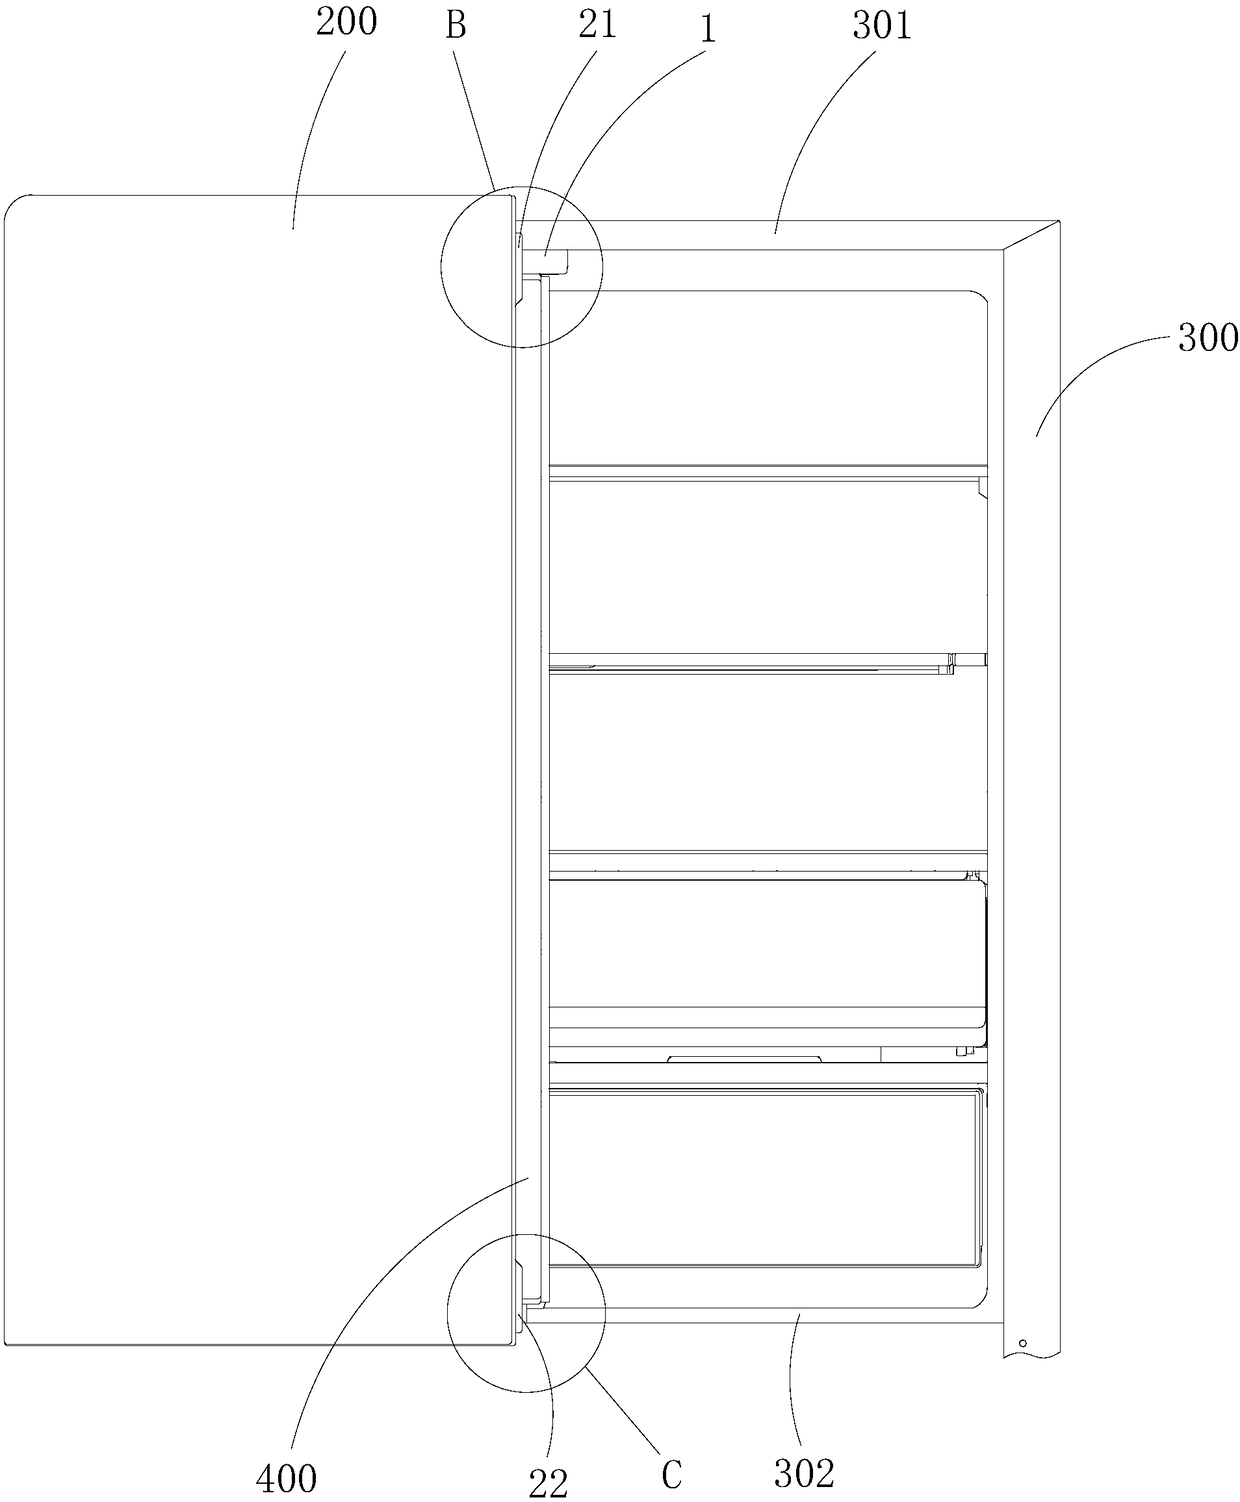 Refrigerator door seal and refrigerator